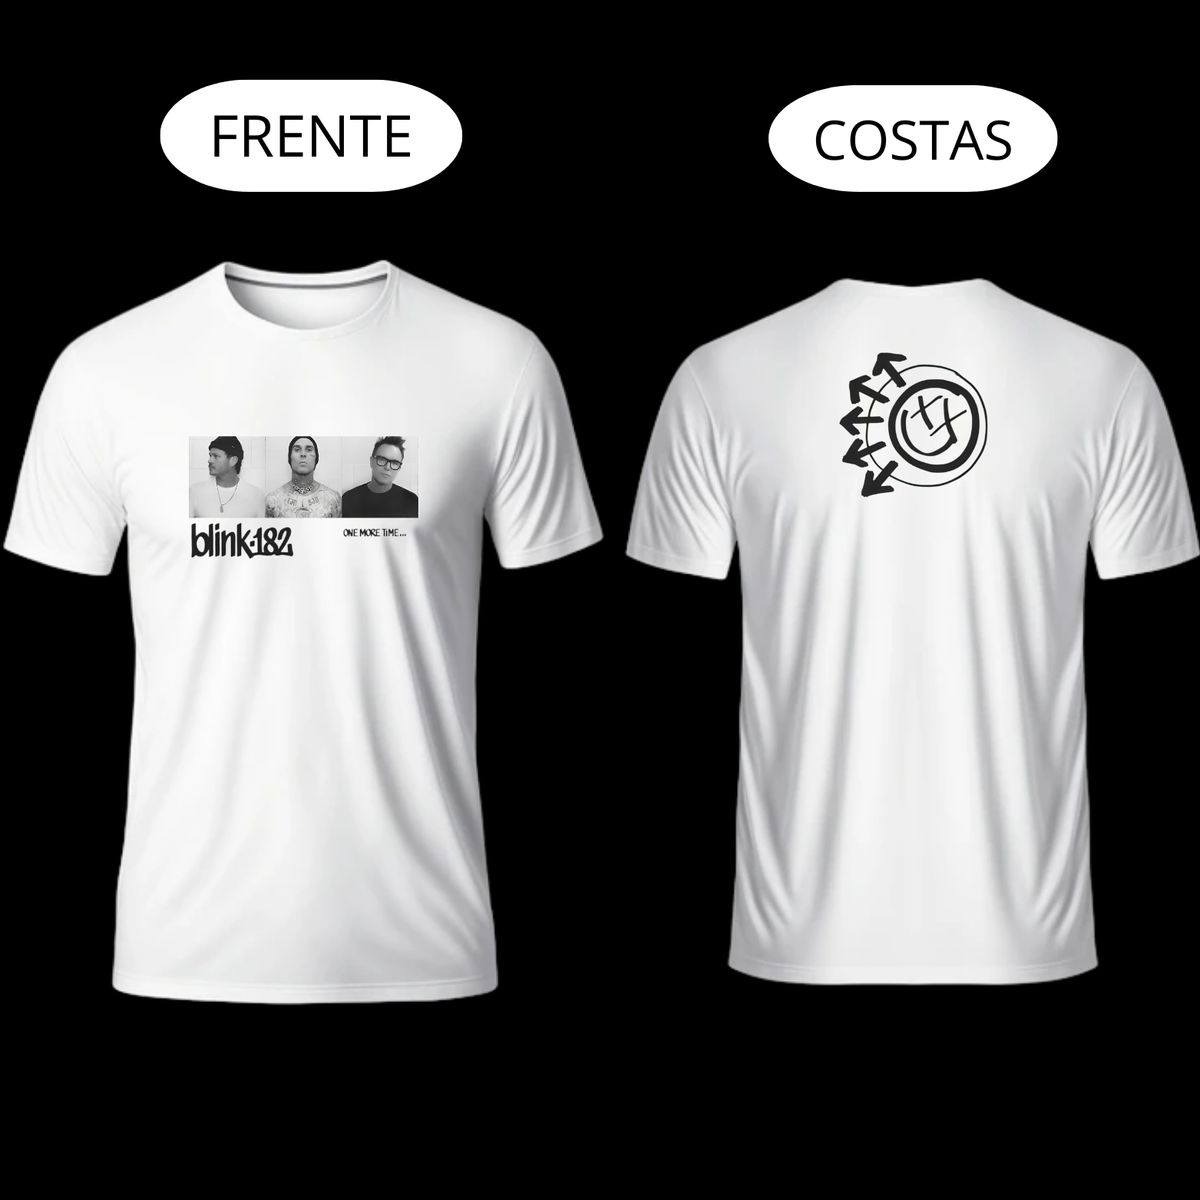 Nome do produto: Camiseta blink 182 Prime Branca , Capa One More Time